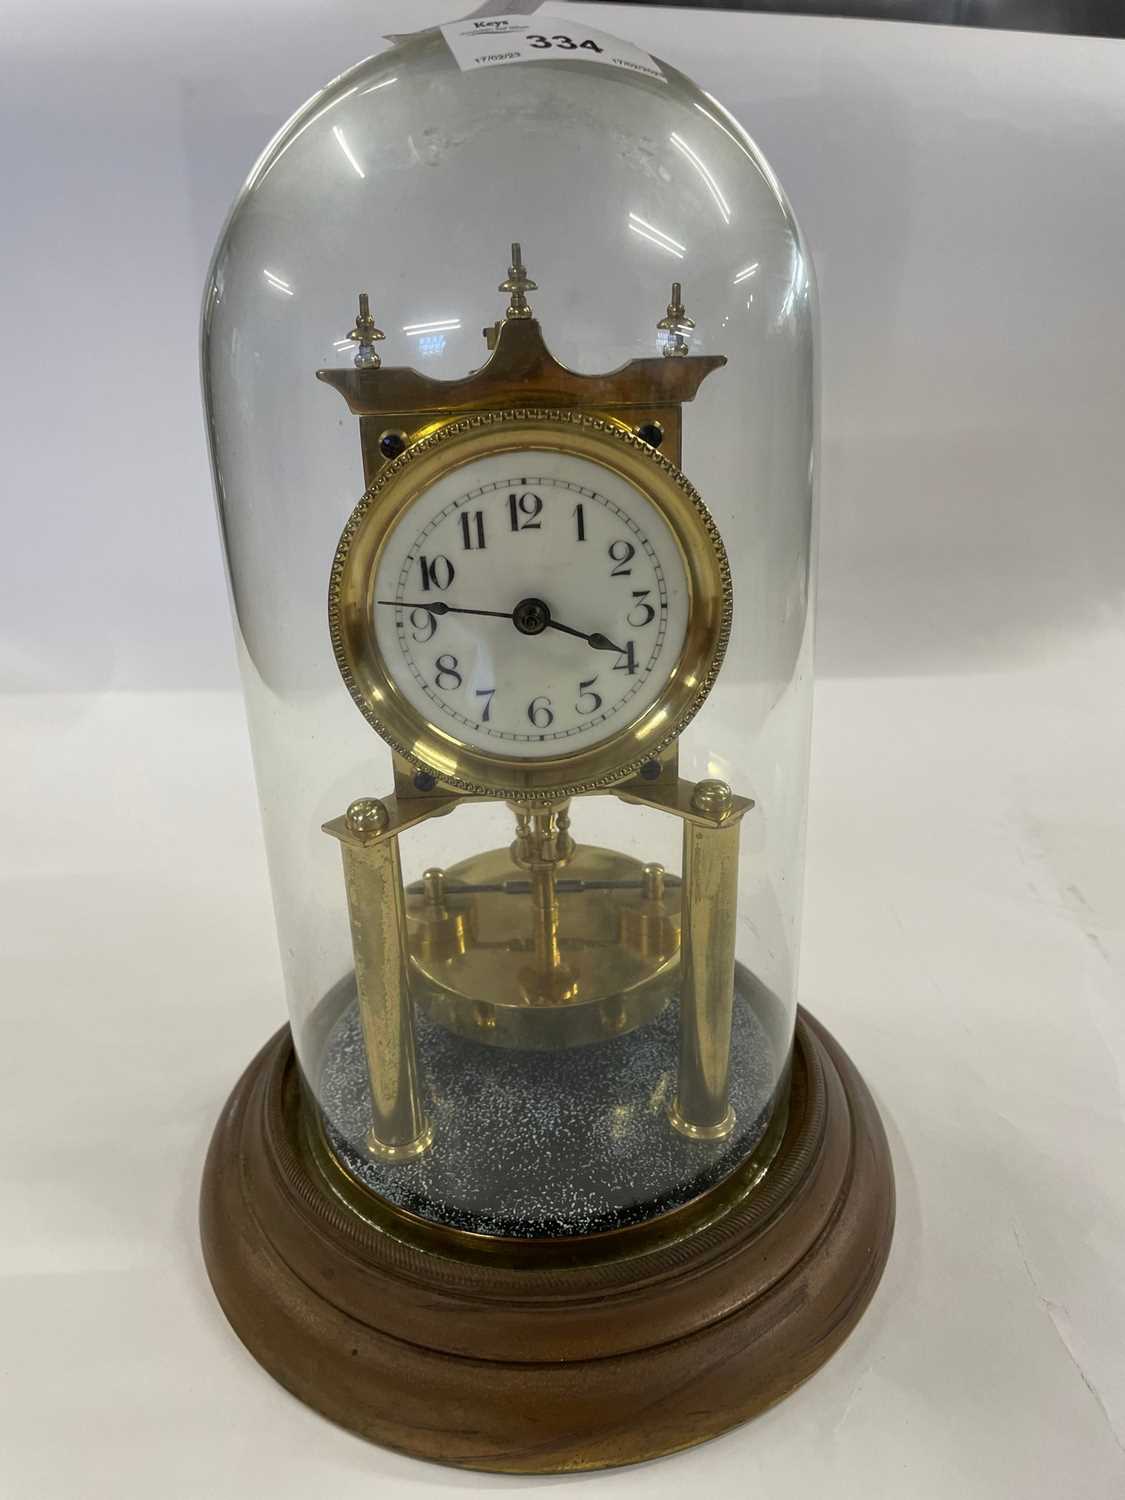 Anniversary clock under a glass dome